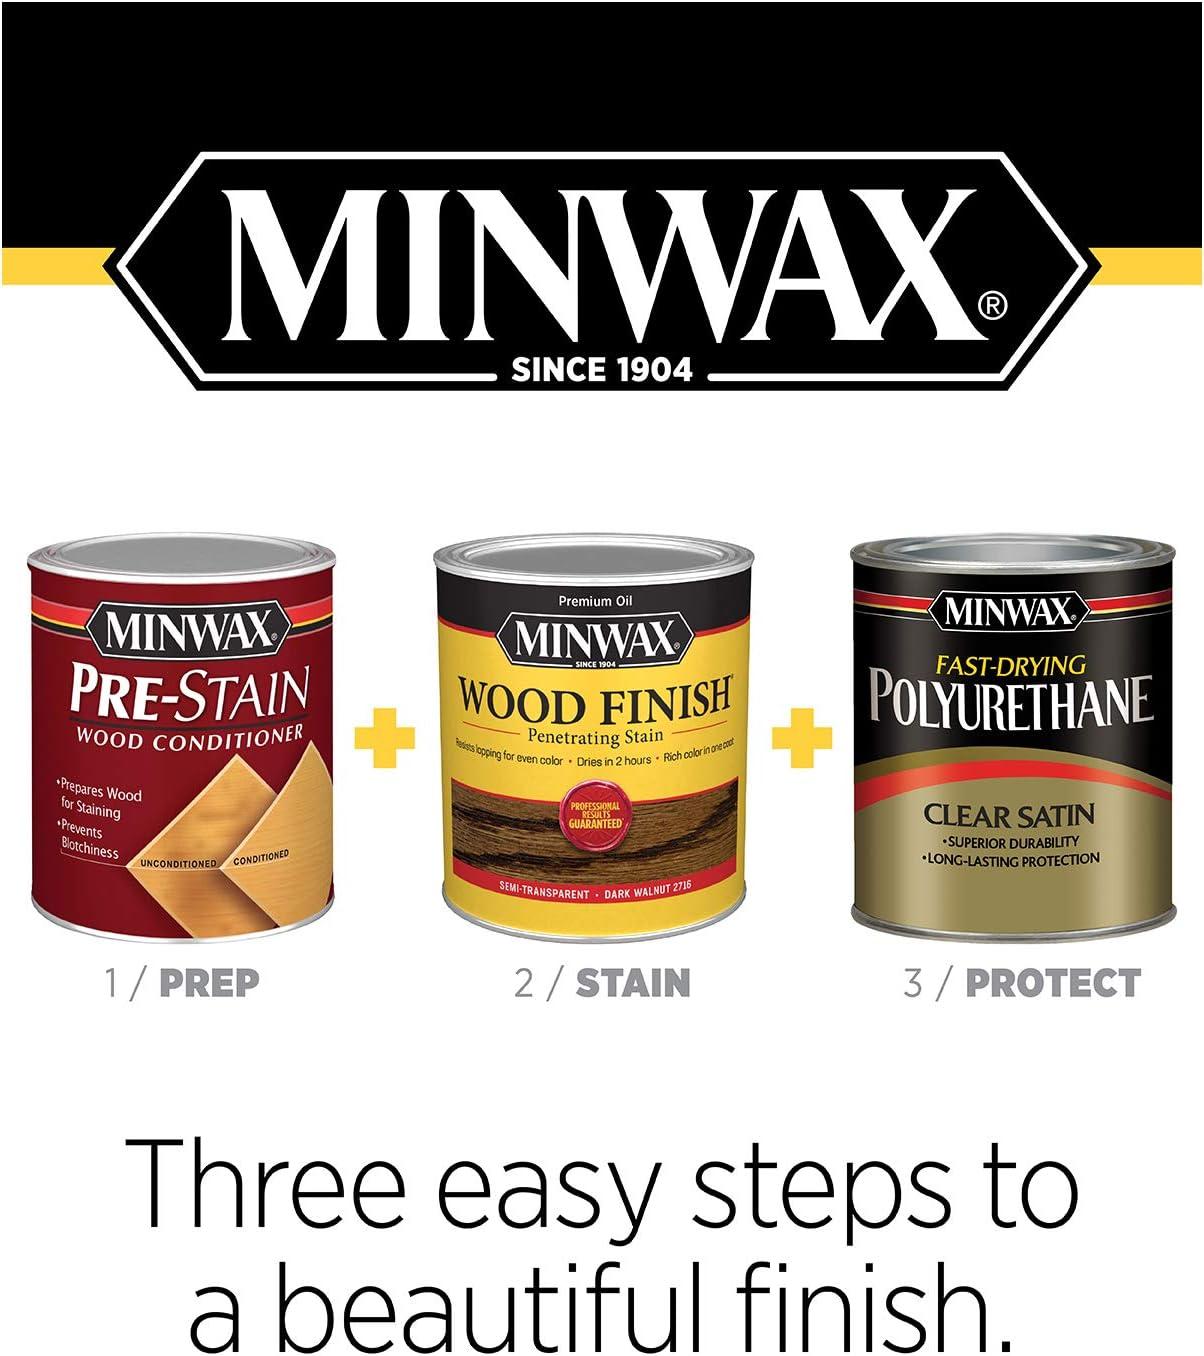 Minwax Fast Drying Polyurethane Spray, Protective Wood Finish, Clear Gloss,  11.5 oz. Aerosol Can